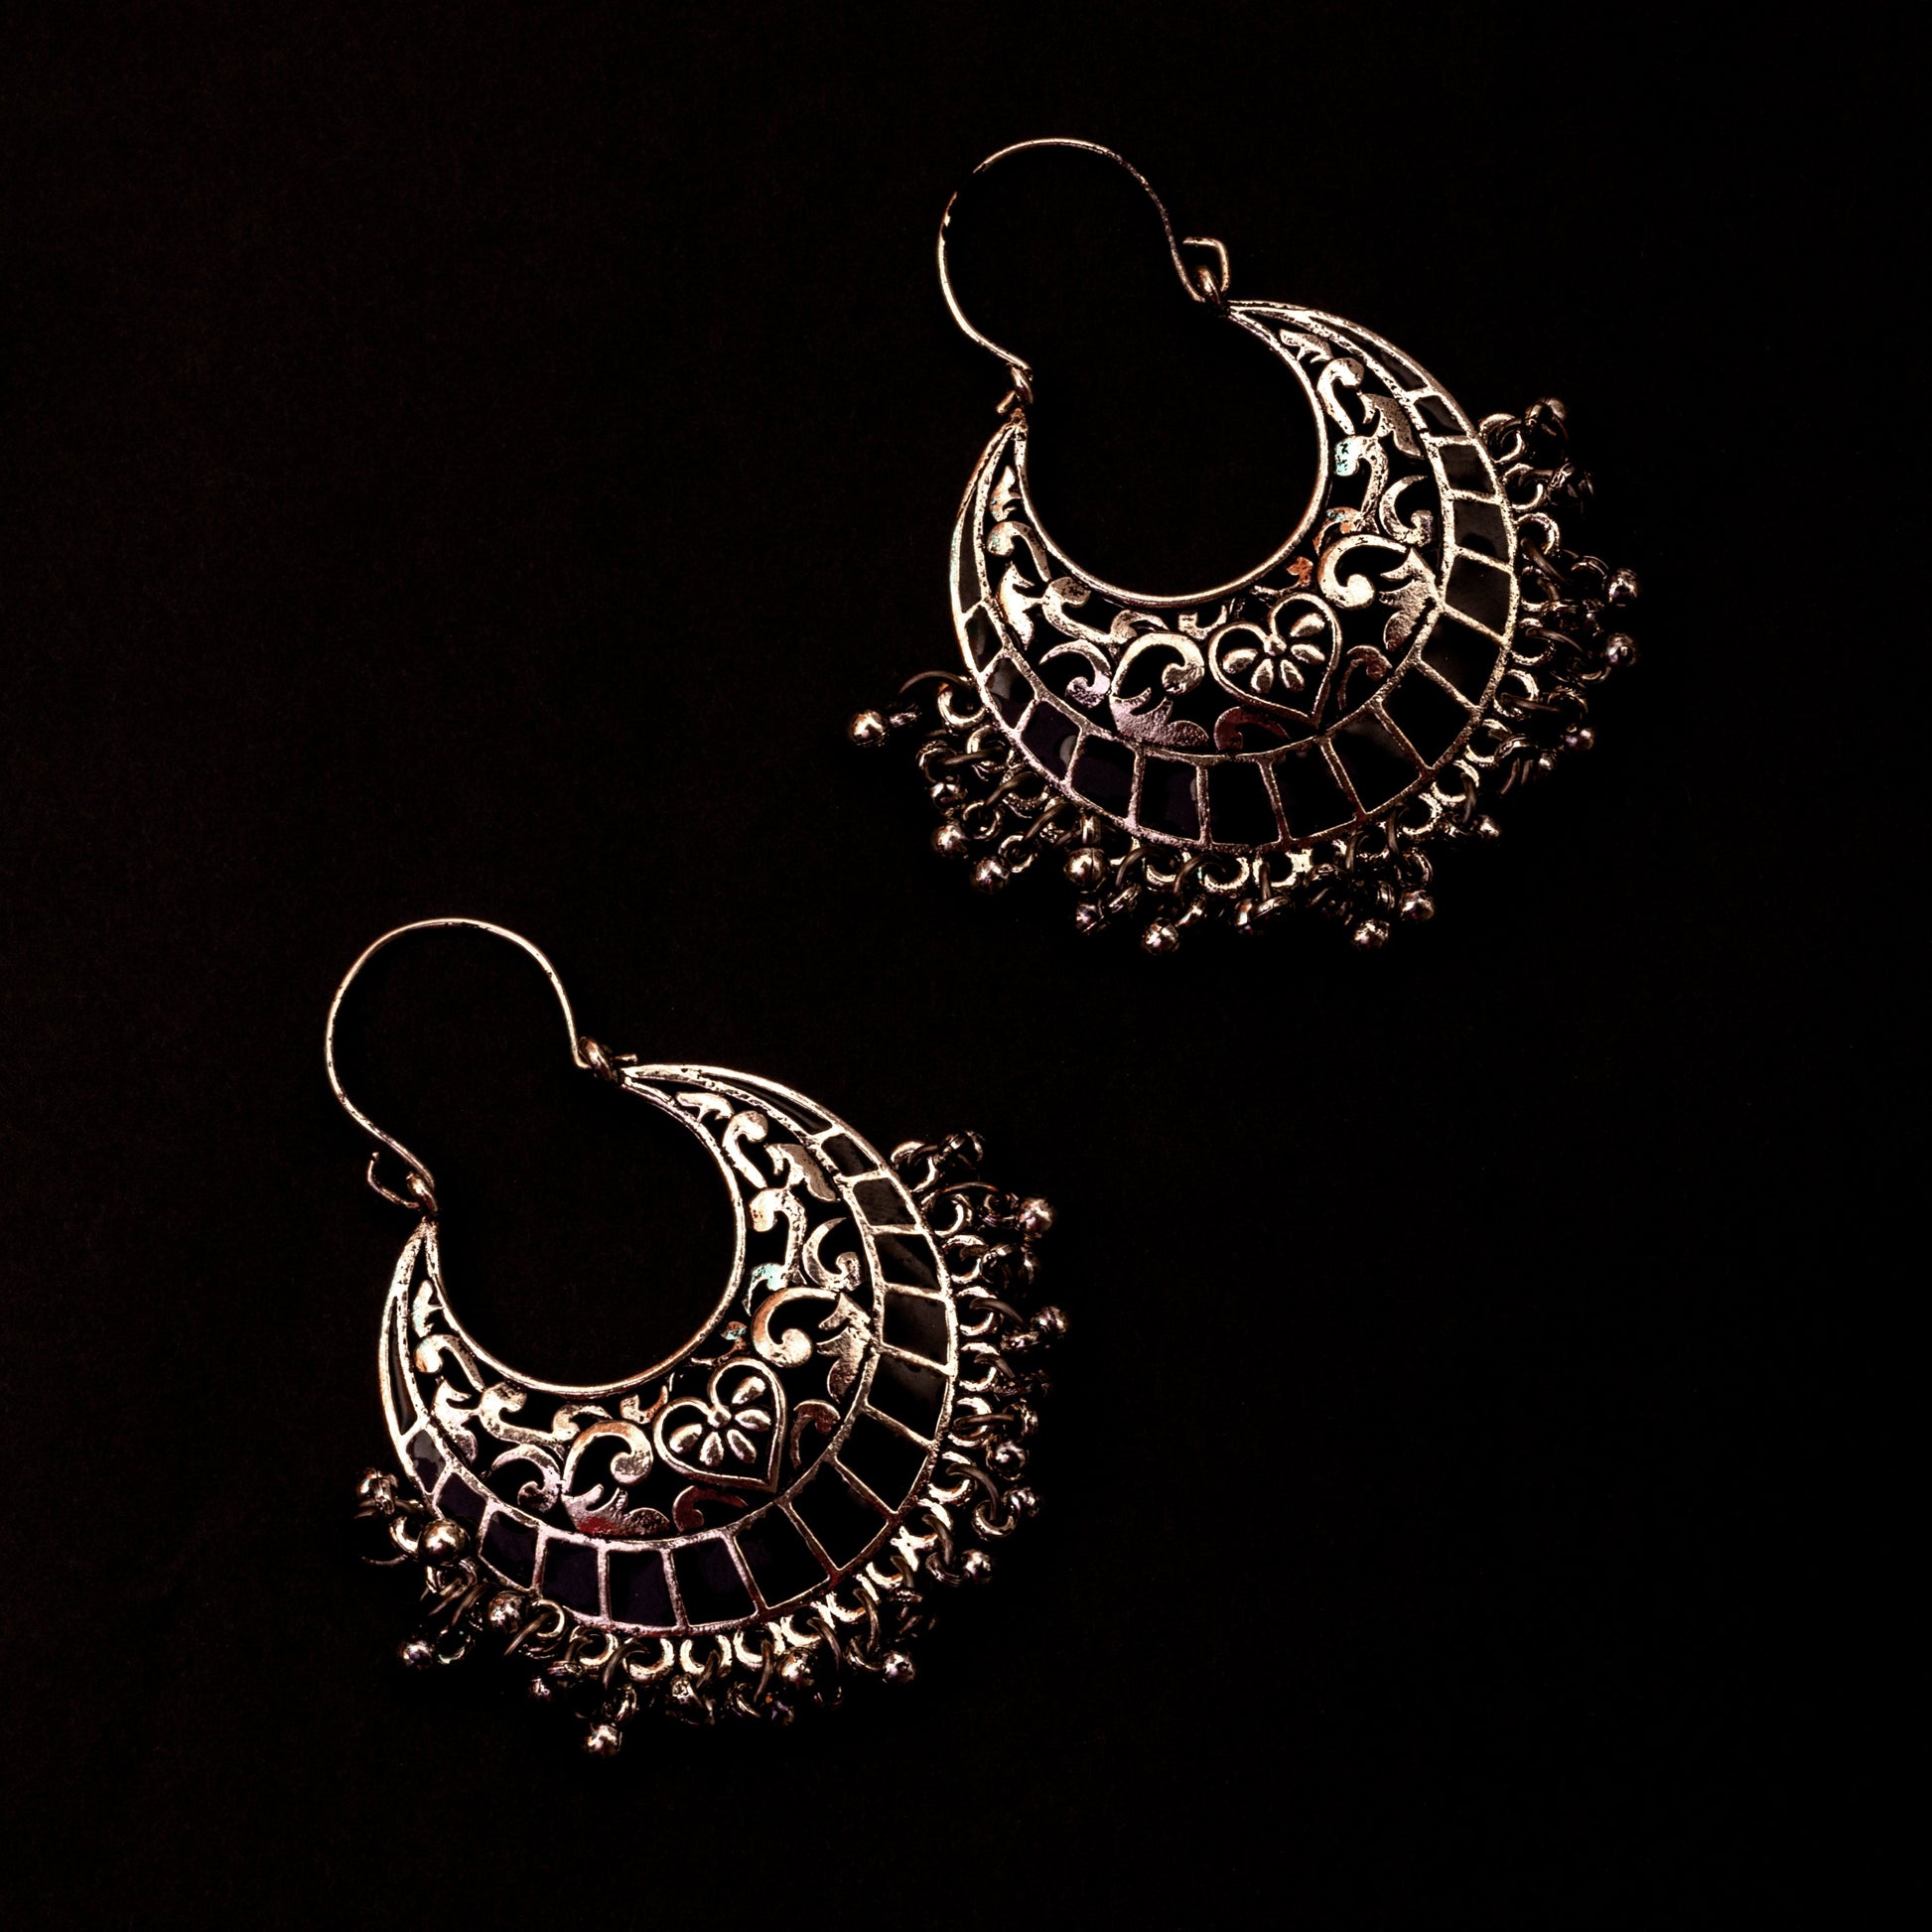 Moonstruck Traditional Indian Oxidised Chandbali Hoop Earrings for Women (Black) - www.MoonstruckINC.com